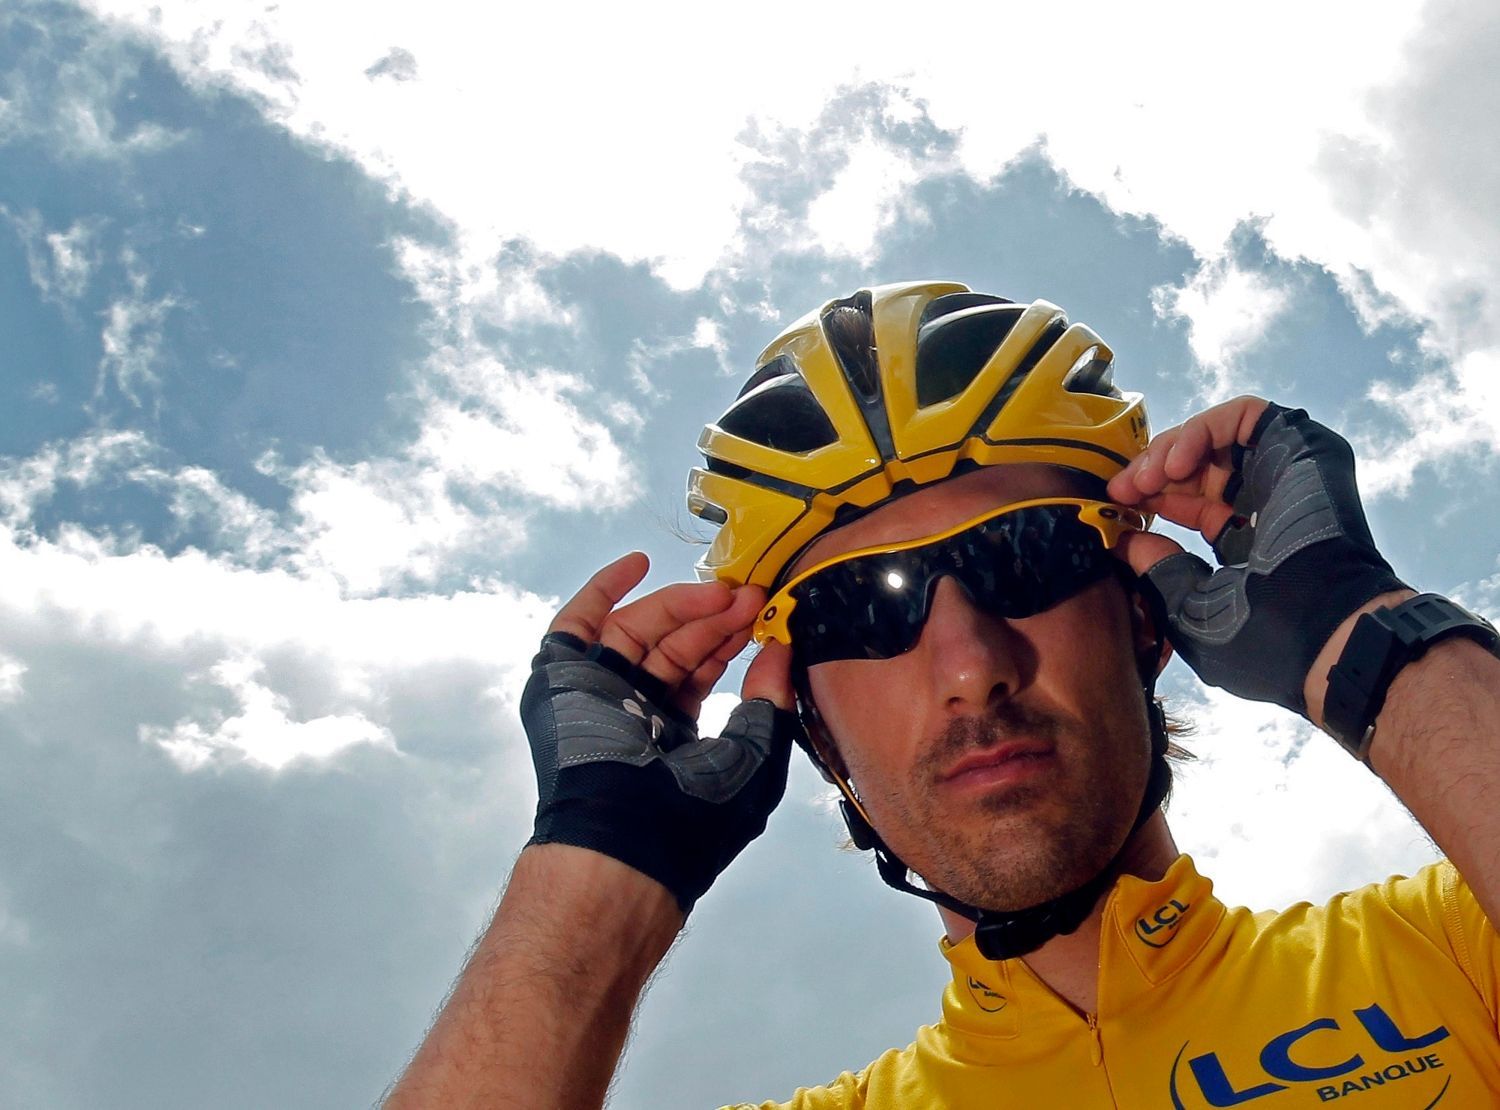 Švýcarský cyklista Fabian Cancellara v šesté etapě Tour de France 2012.